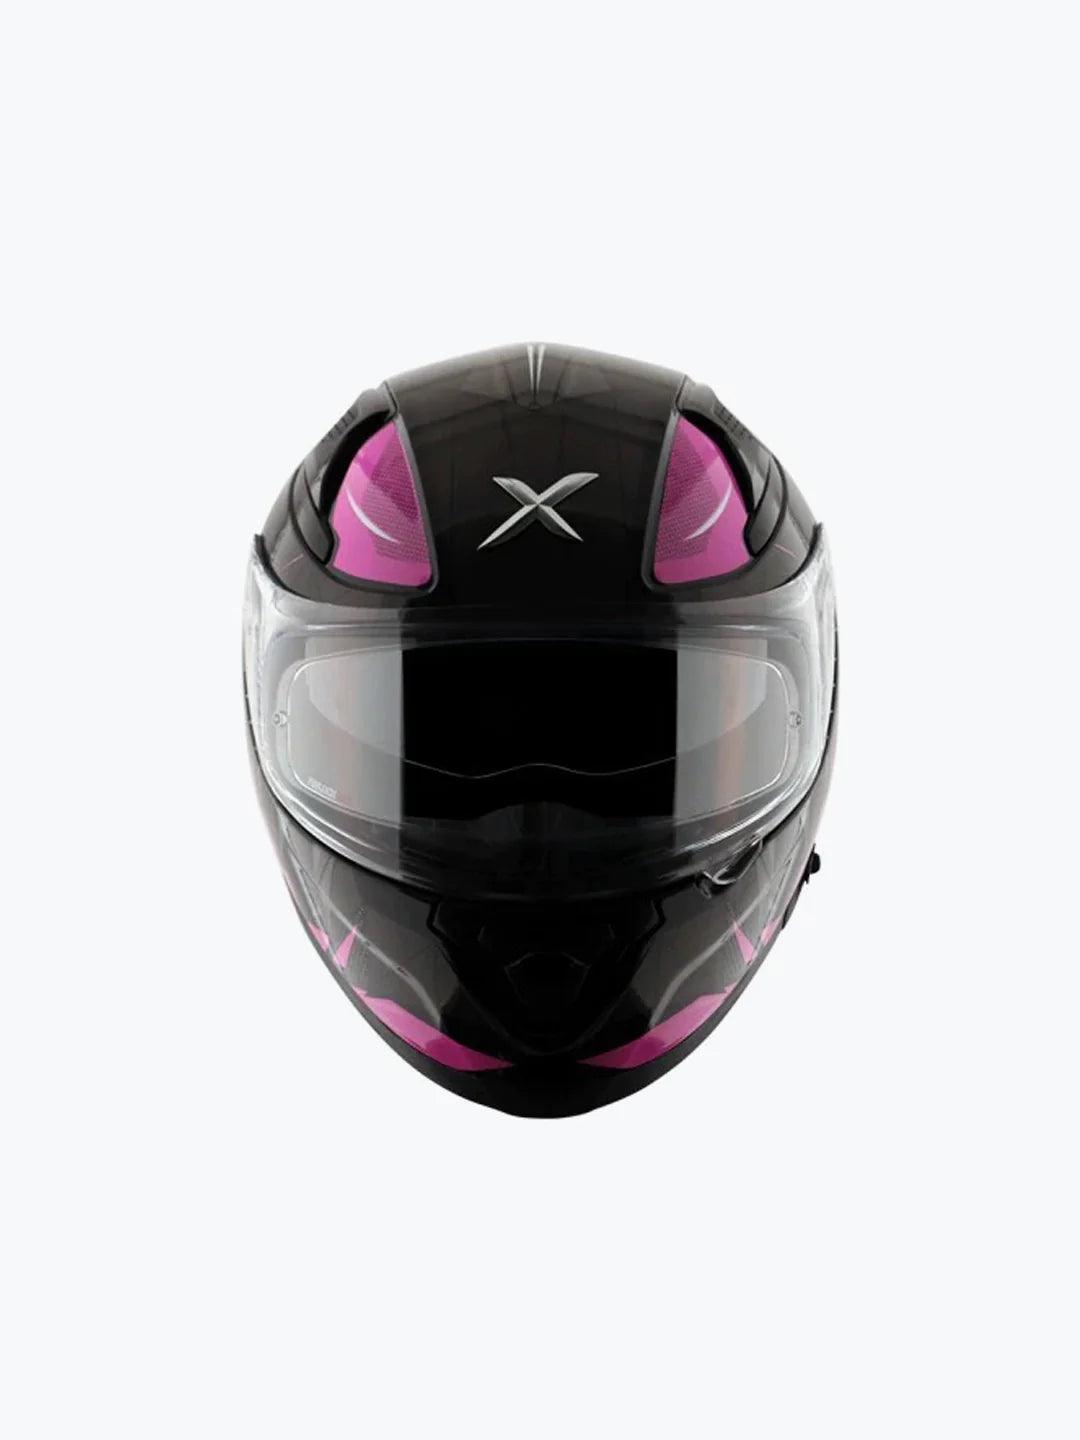 Axor Apex Hunter Gloss Black Pink Helmet L - Moto Modz